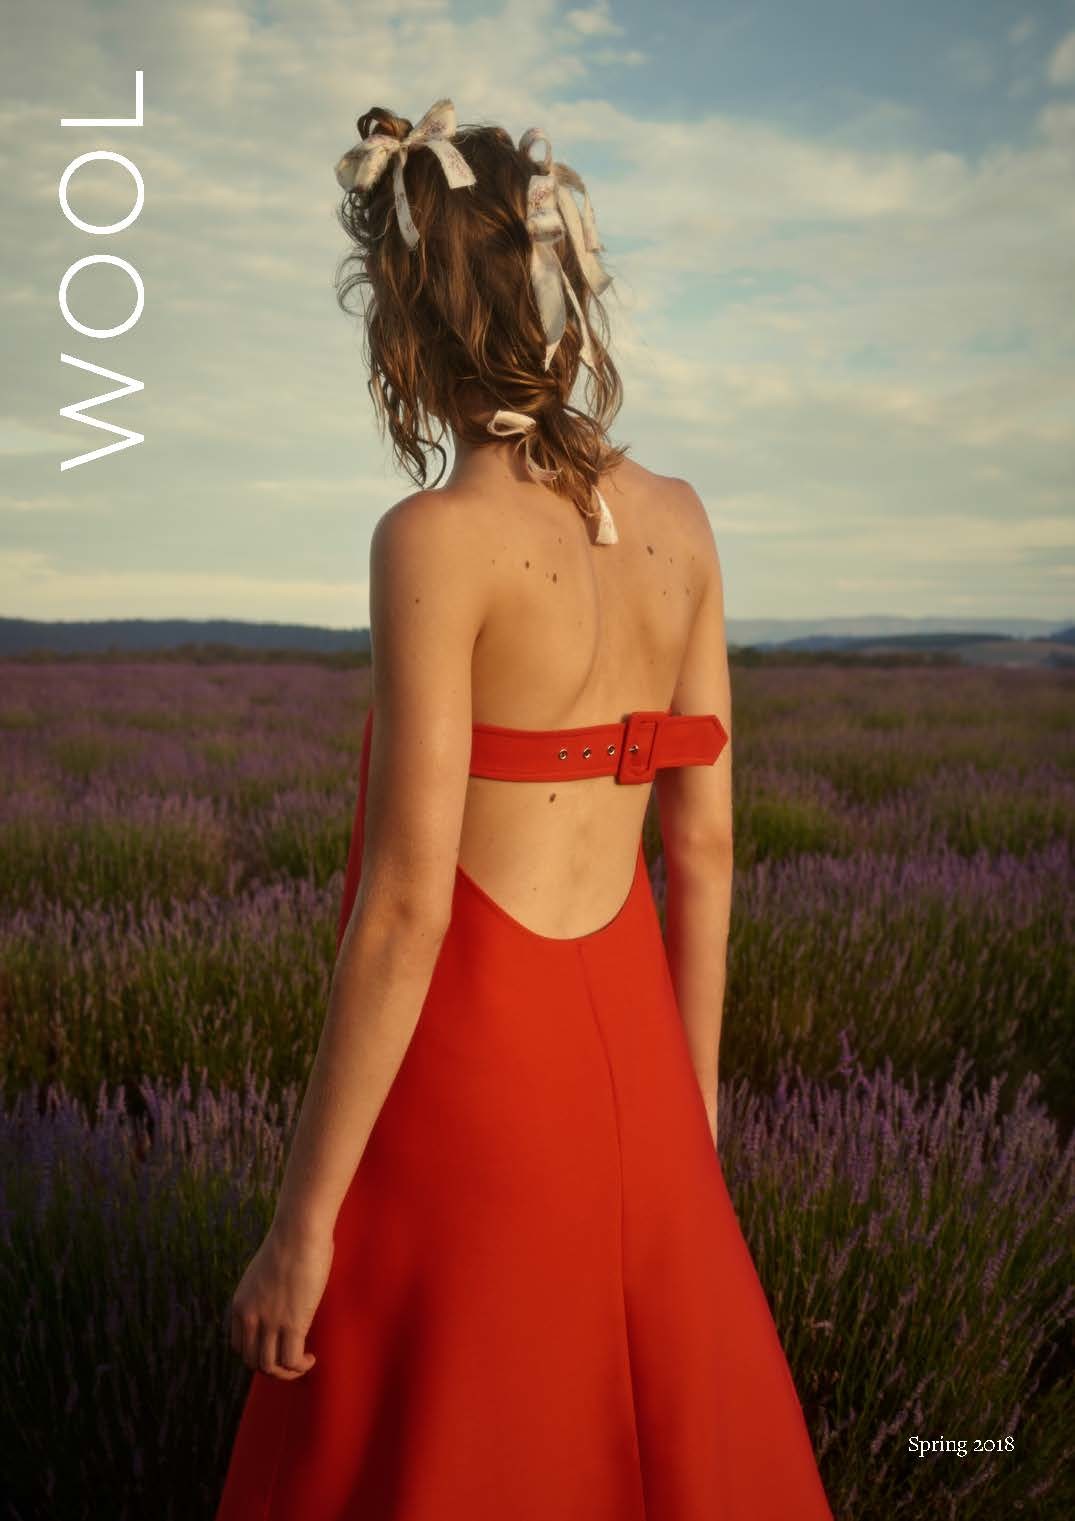 Into The Wild - Wool Magazine